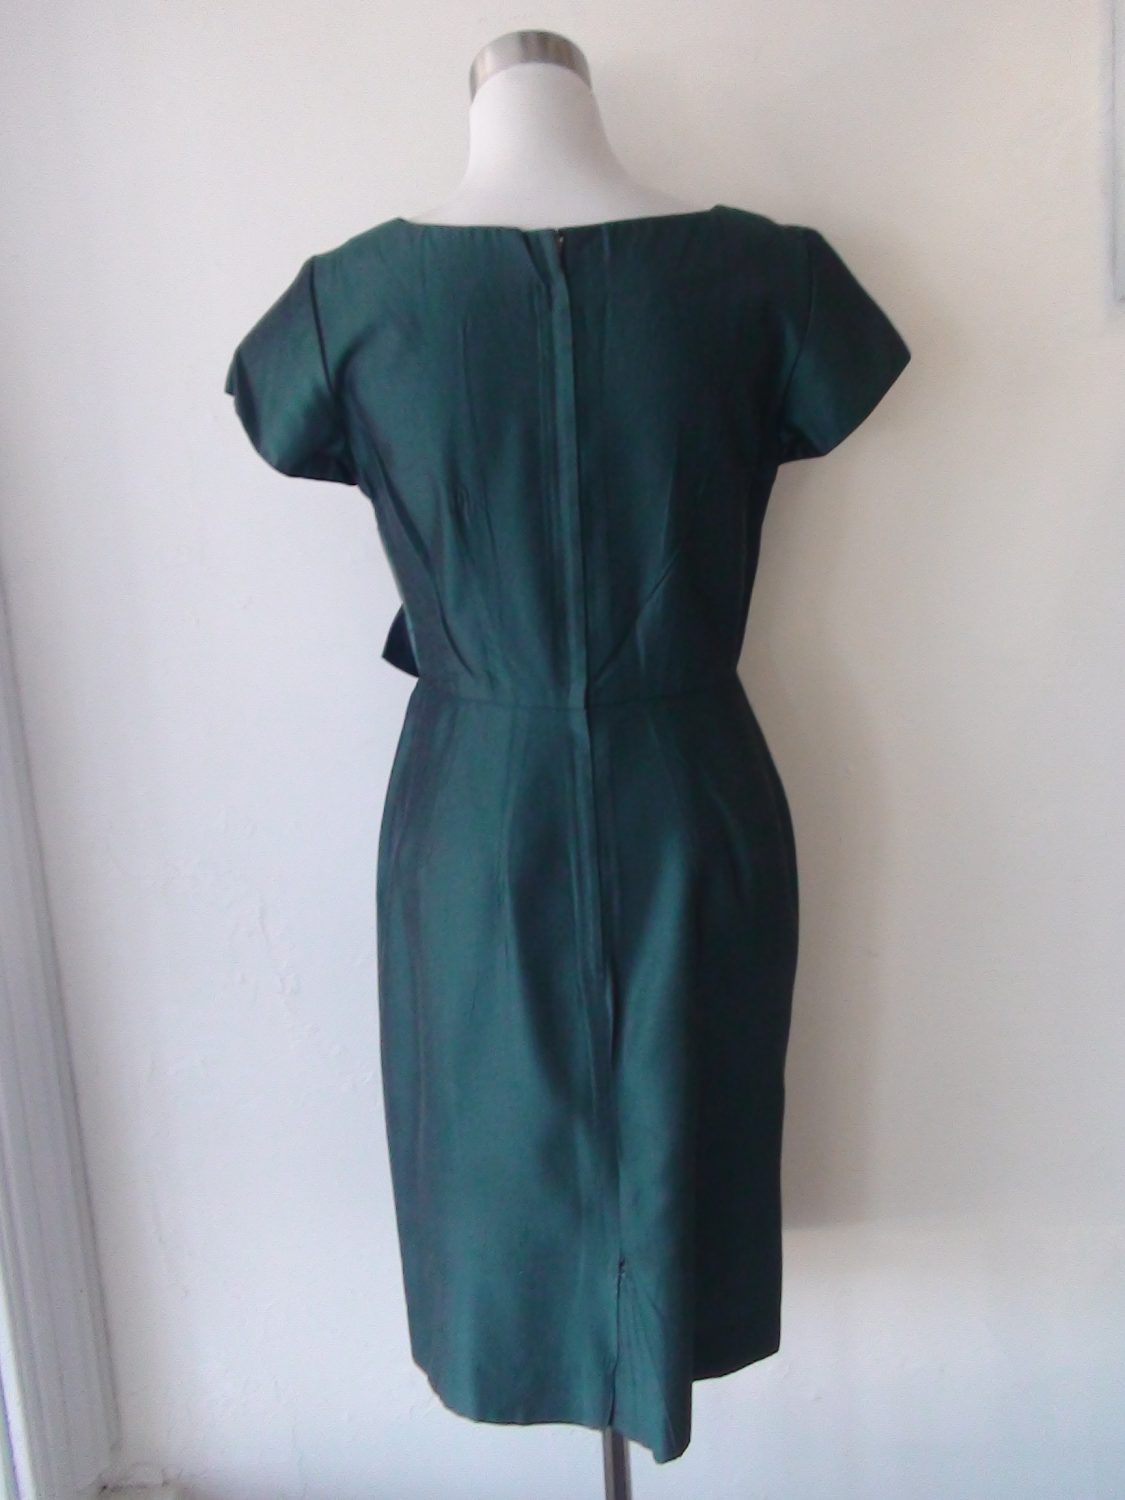 ELEGANT EMERALD GREEN 1950S DRESS | Chaos Bazaar Vintage